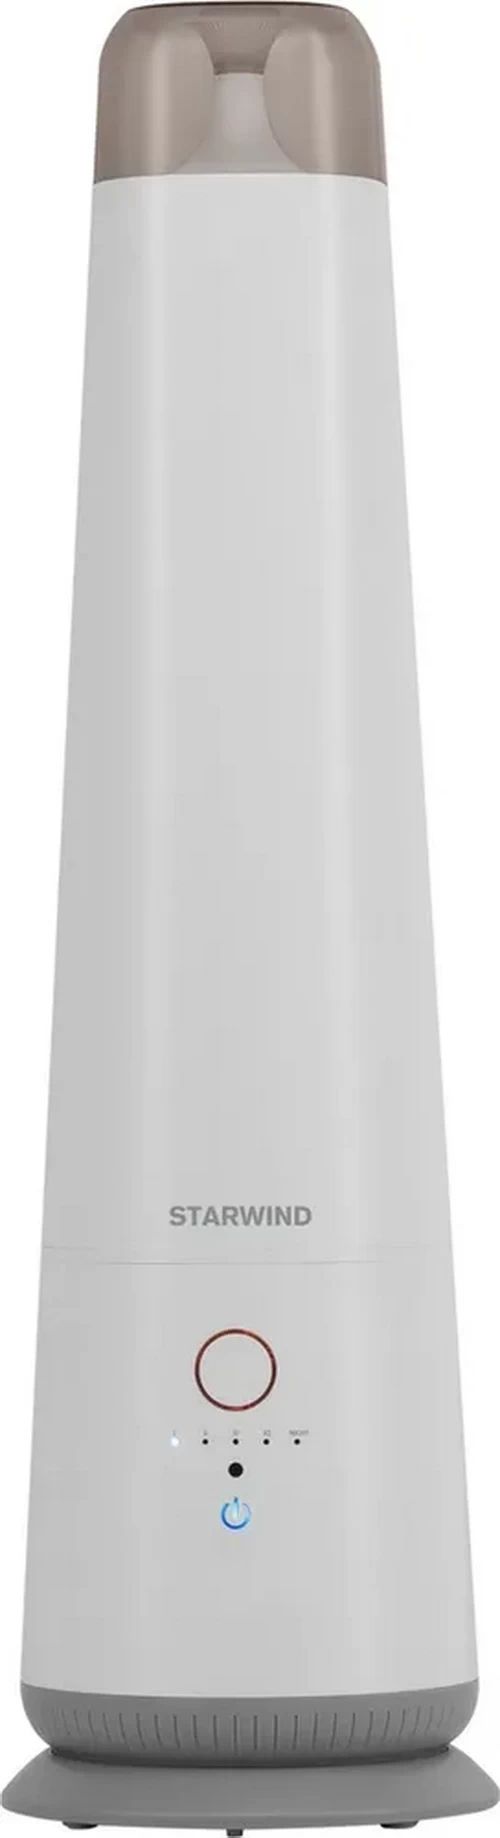 Воздухоувлажнитель STARWIND SHC1550 белый воздухоувлажнитель starwind shc1550 white gray